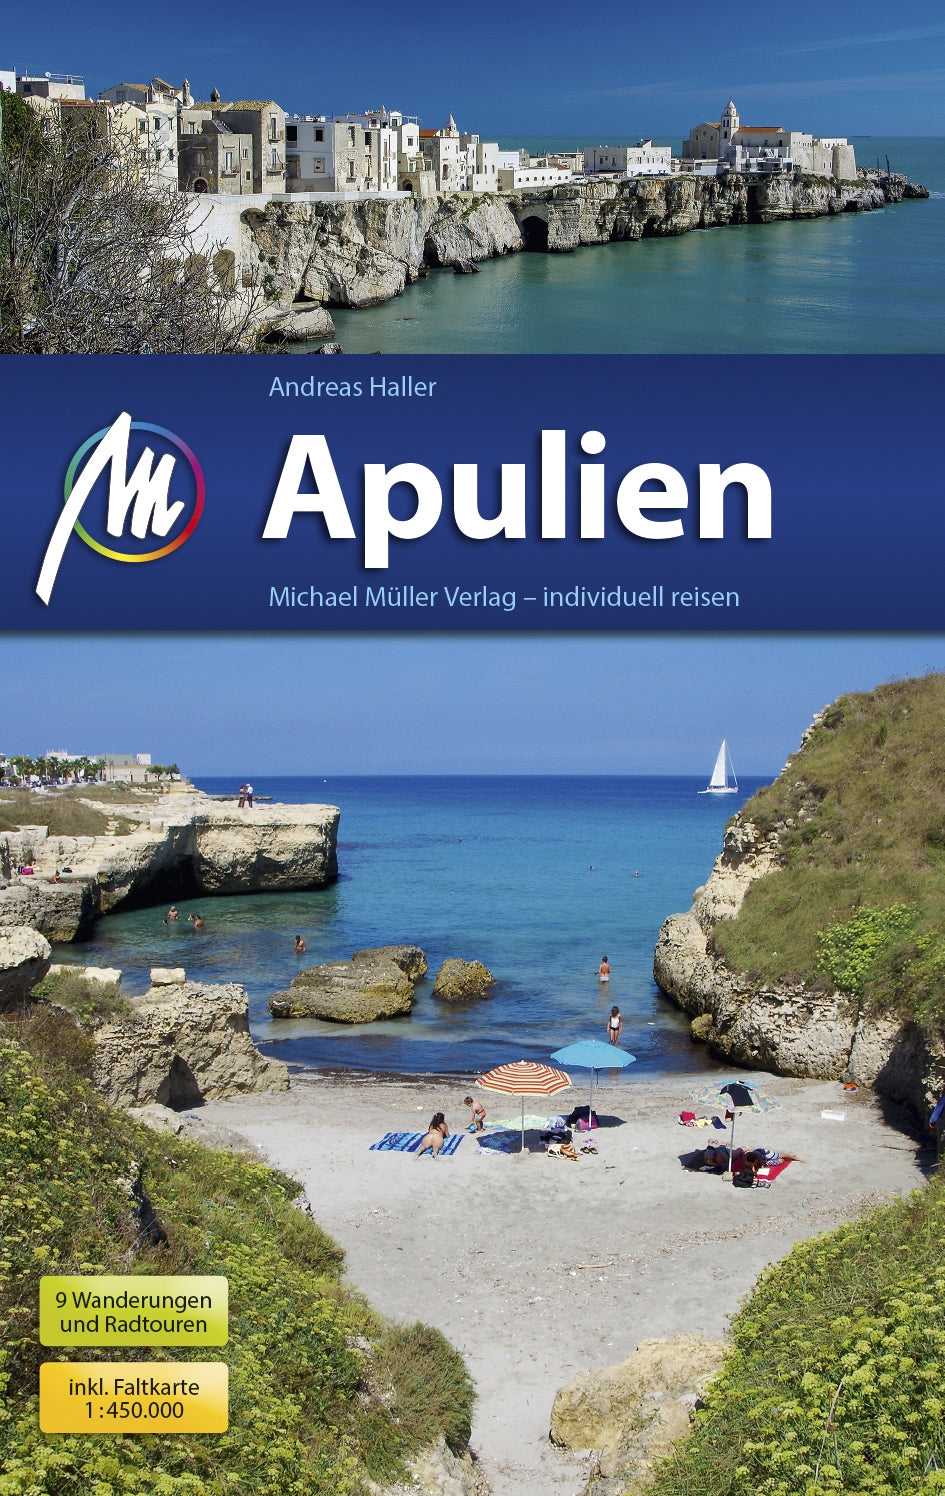 Travel guide Apulien 9.A 2018